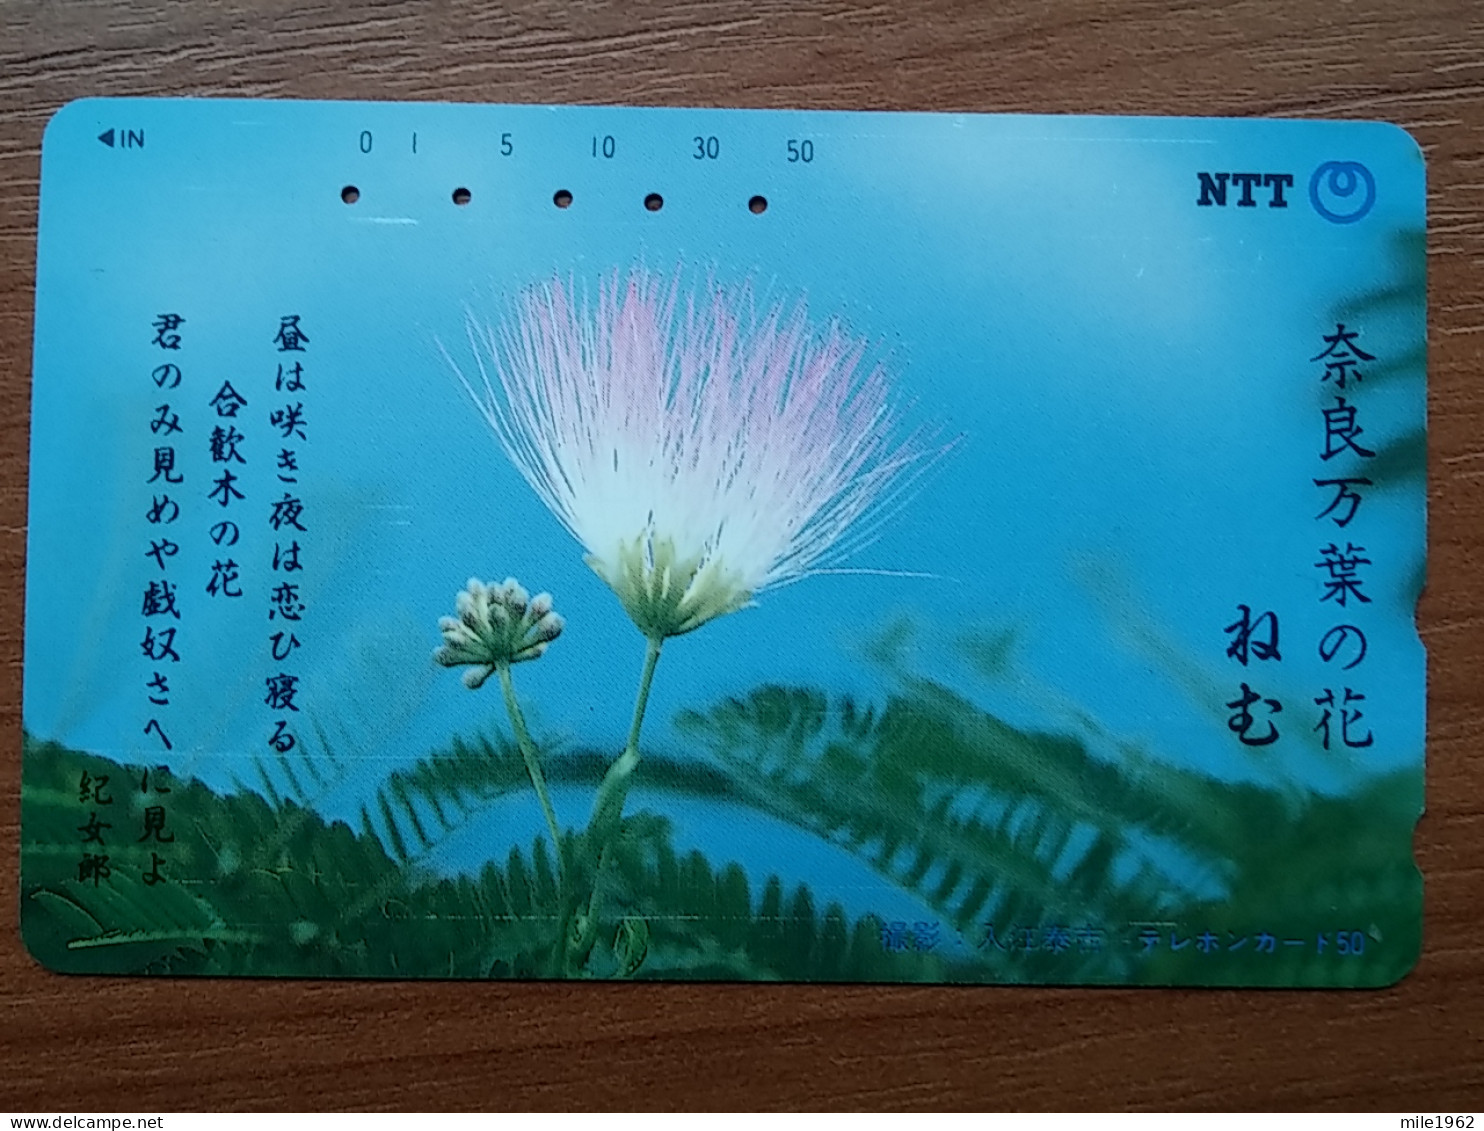 T-382 - JAPAN, Japon, Nipon, TELECARD, PHONECARD, Flower, Fleur, NTT 331-249 - Bloemen